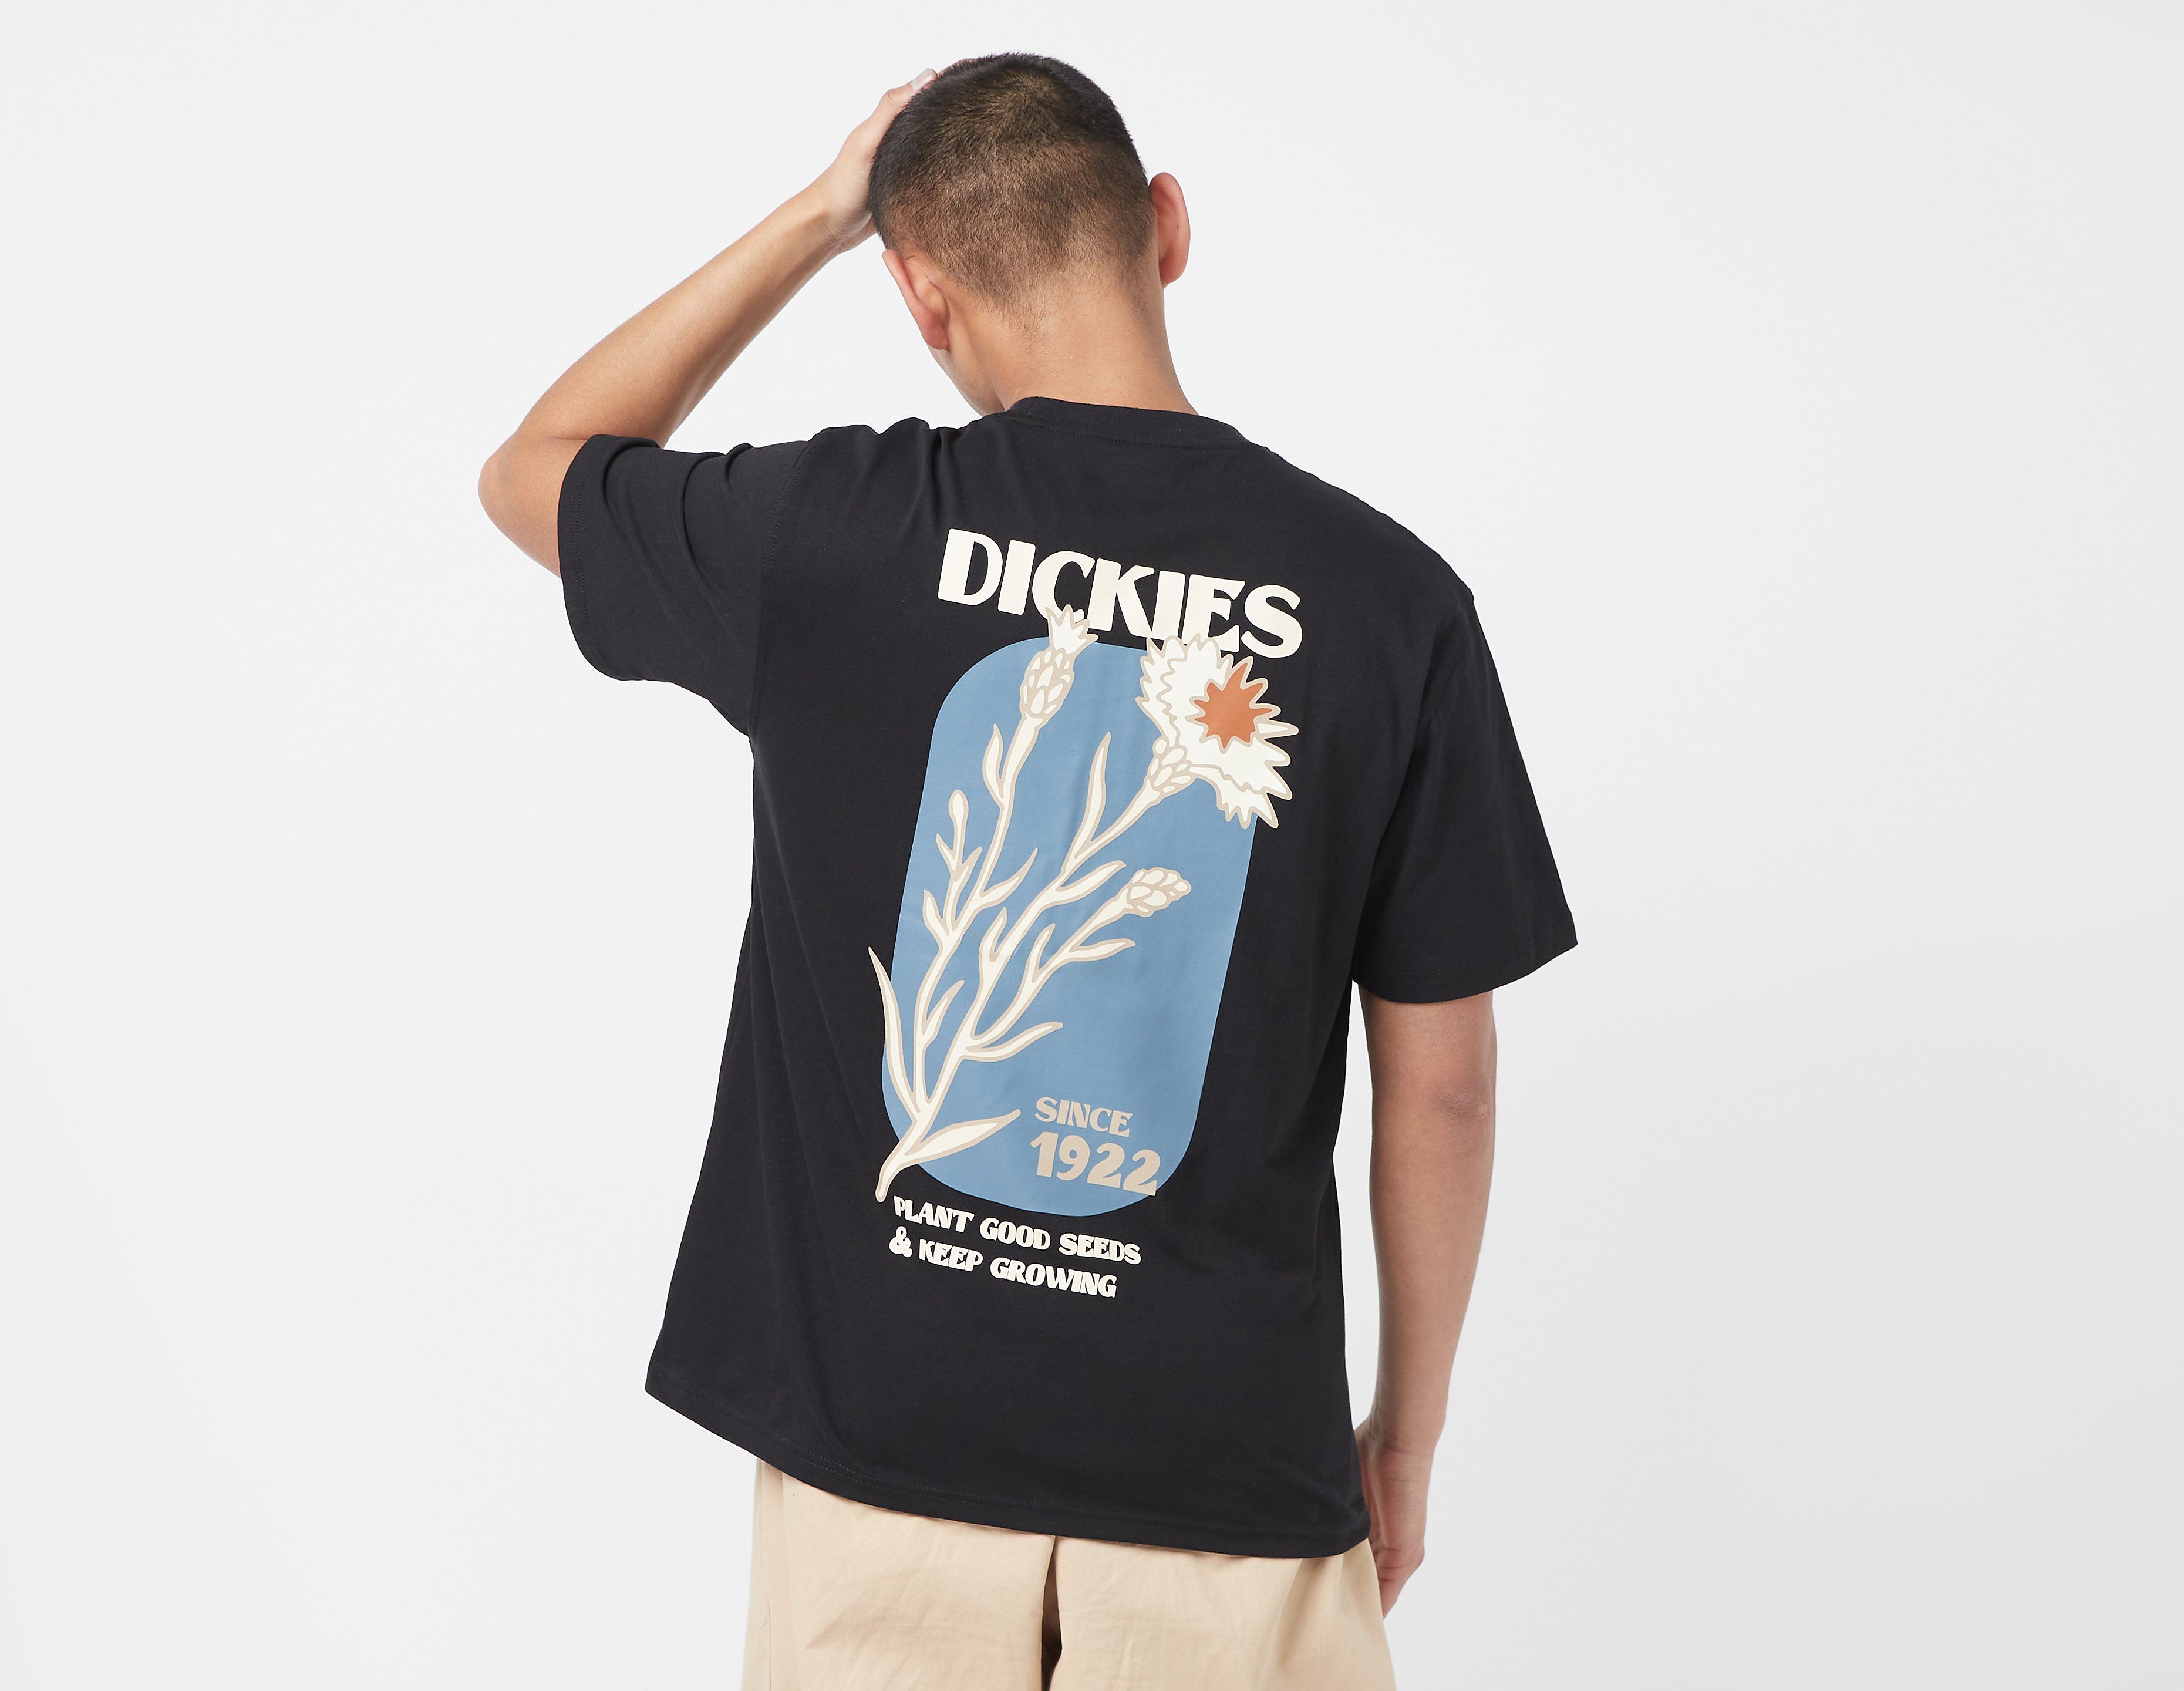 Dickies Herndon T-Shirt, Black